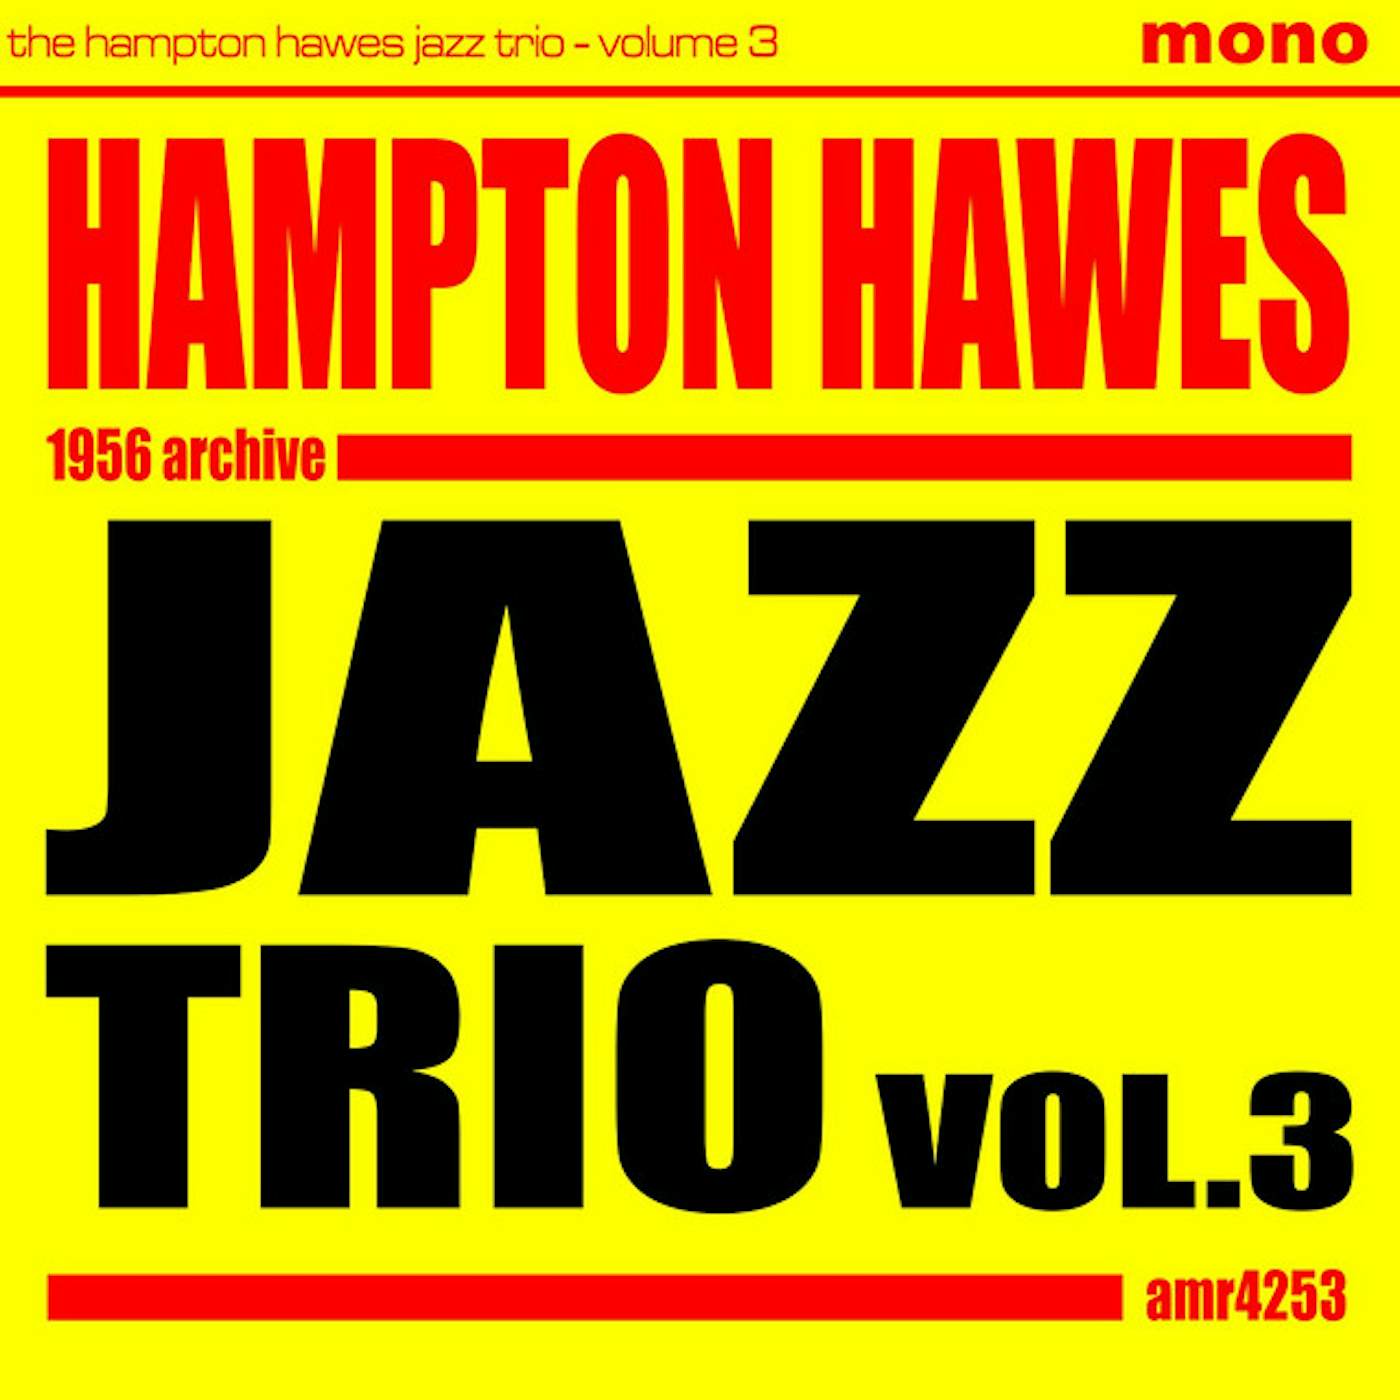 Hampton Hawes TRIO VOL 3 CD